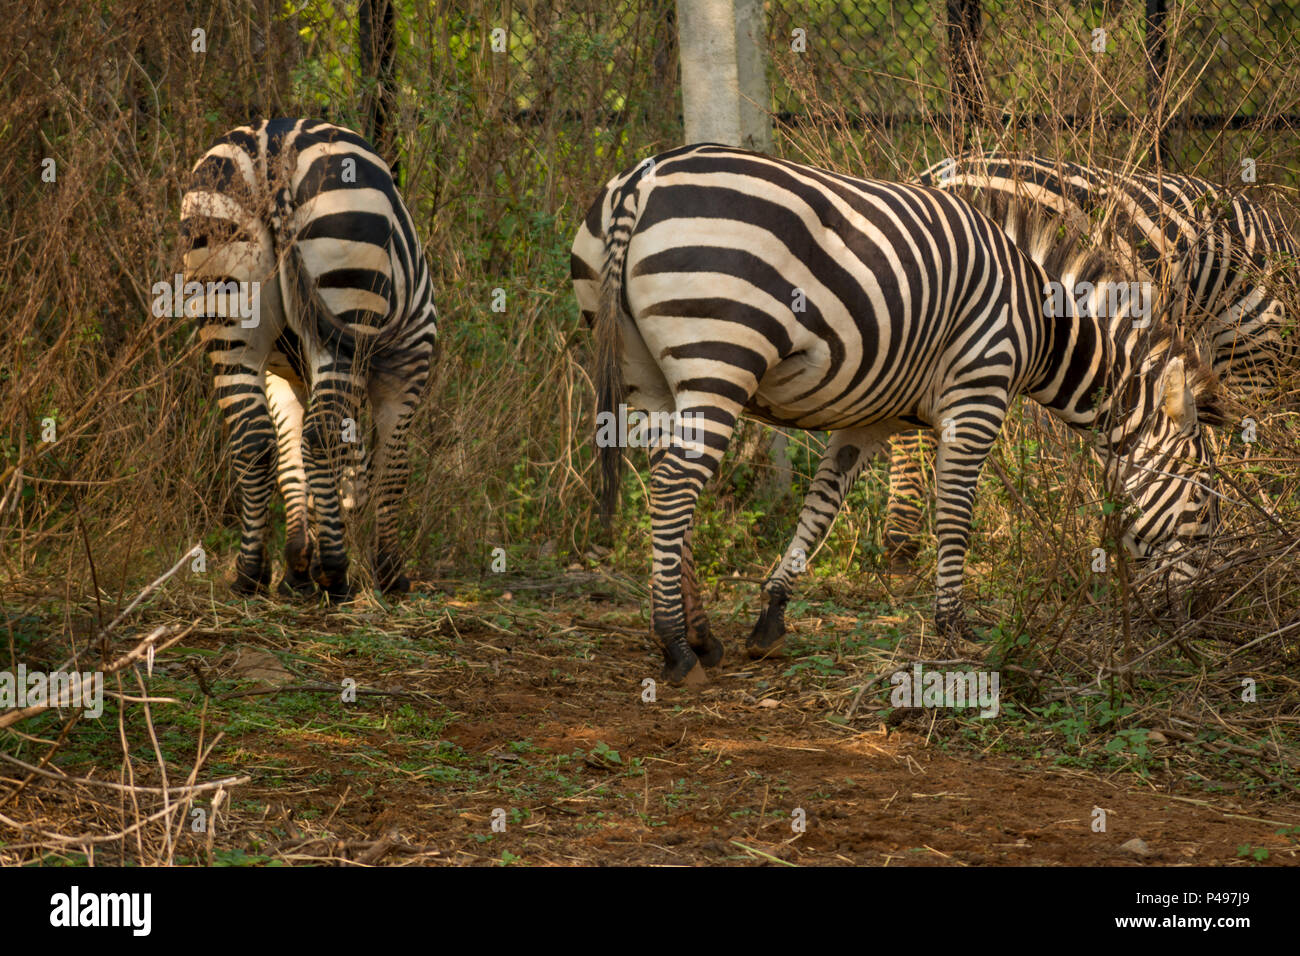 Zebras grazing in captivity, Bangalore India Stock Photo